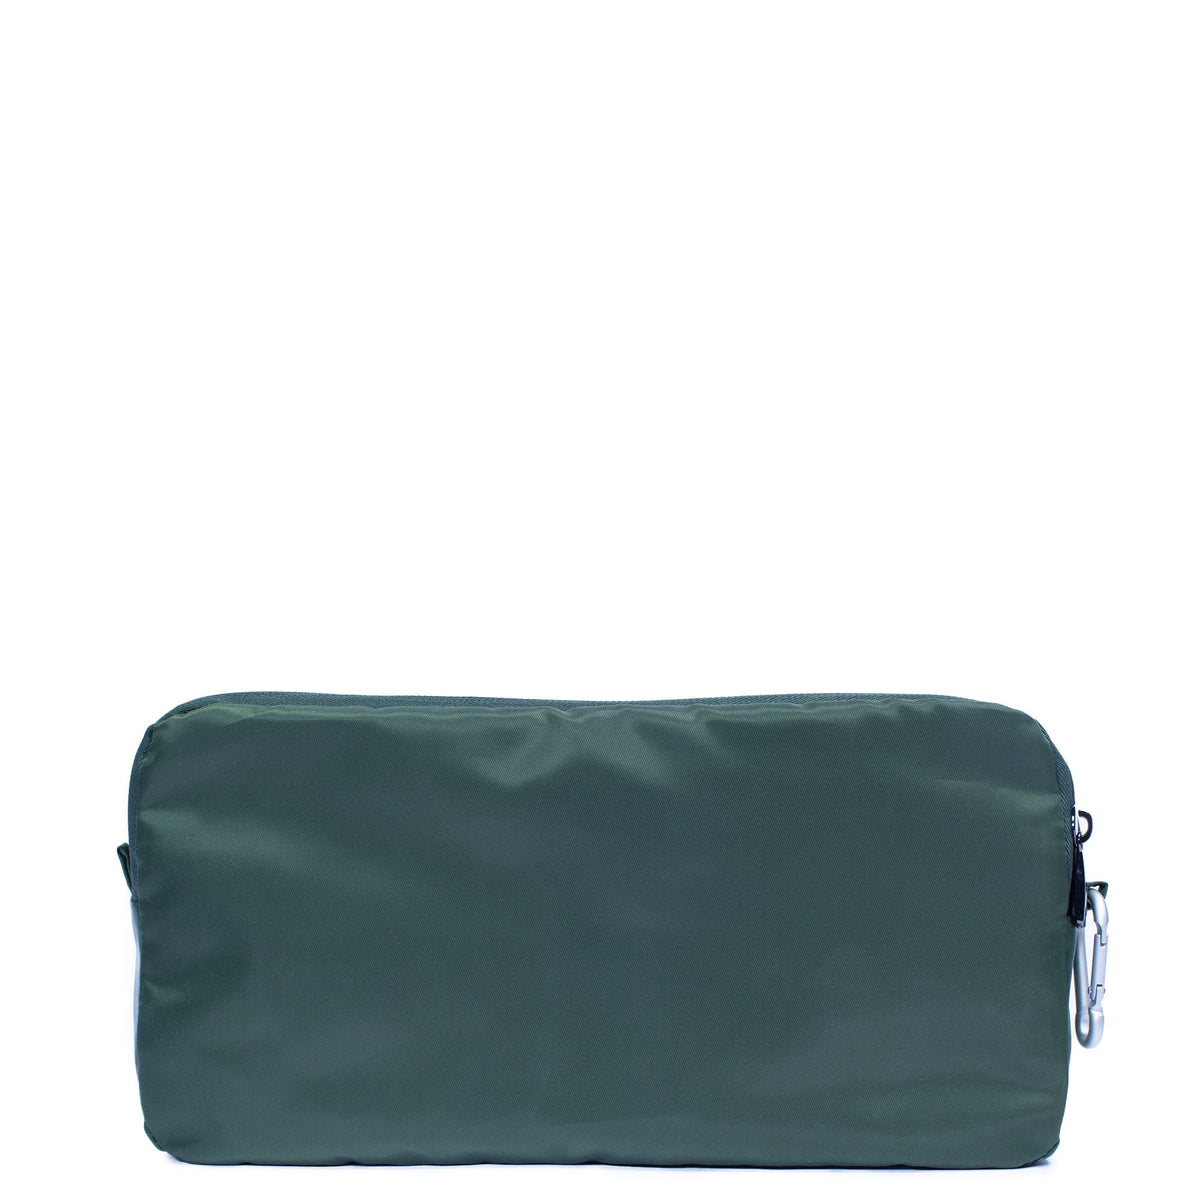 Puddle Jumper Packable Tote Bag